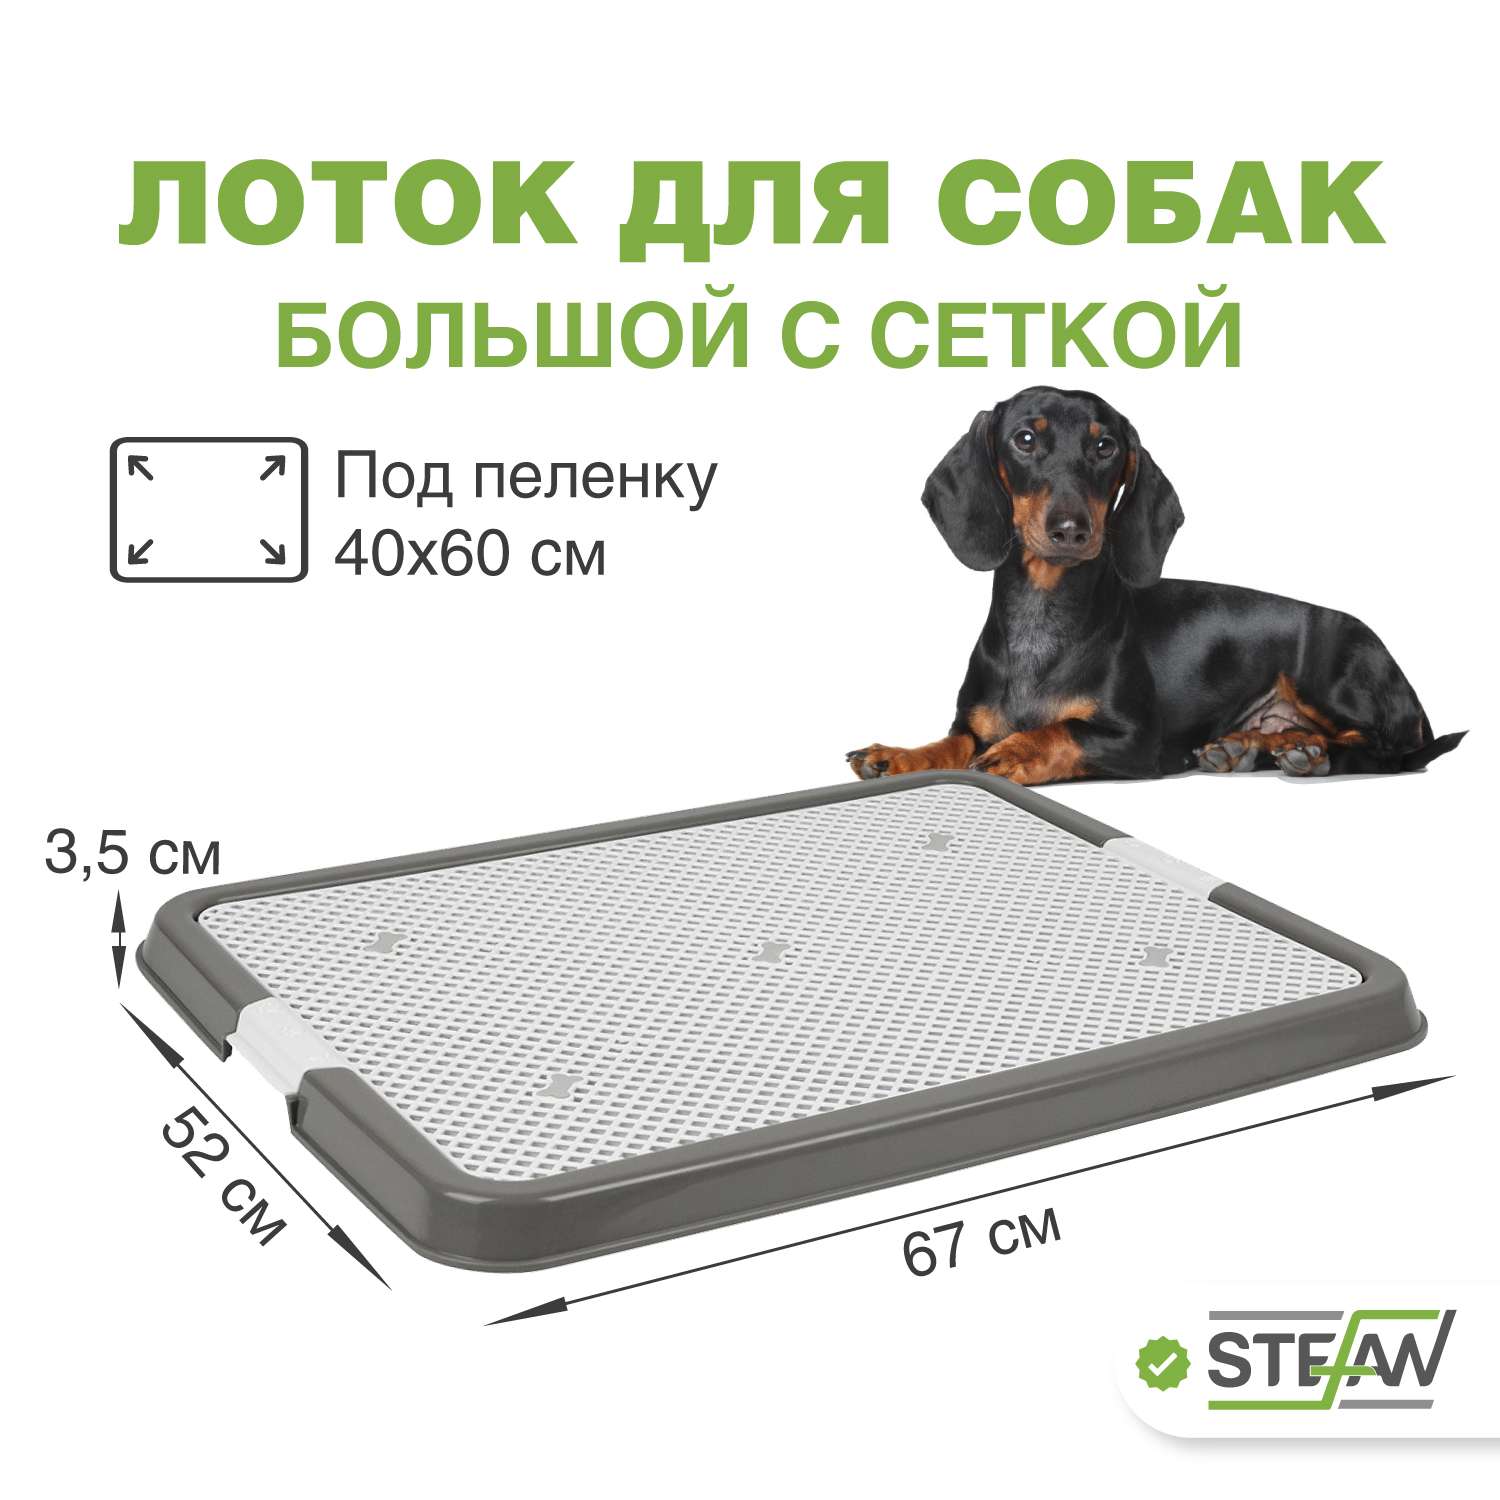 Туалет лоток для собак Stefan с сеткой большой L 67х52х3.5 серый - фото 1